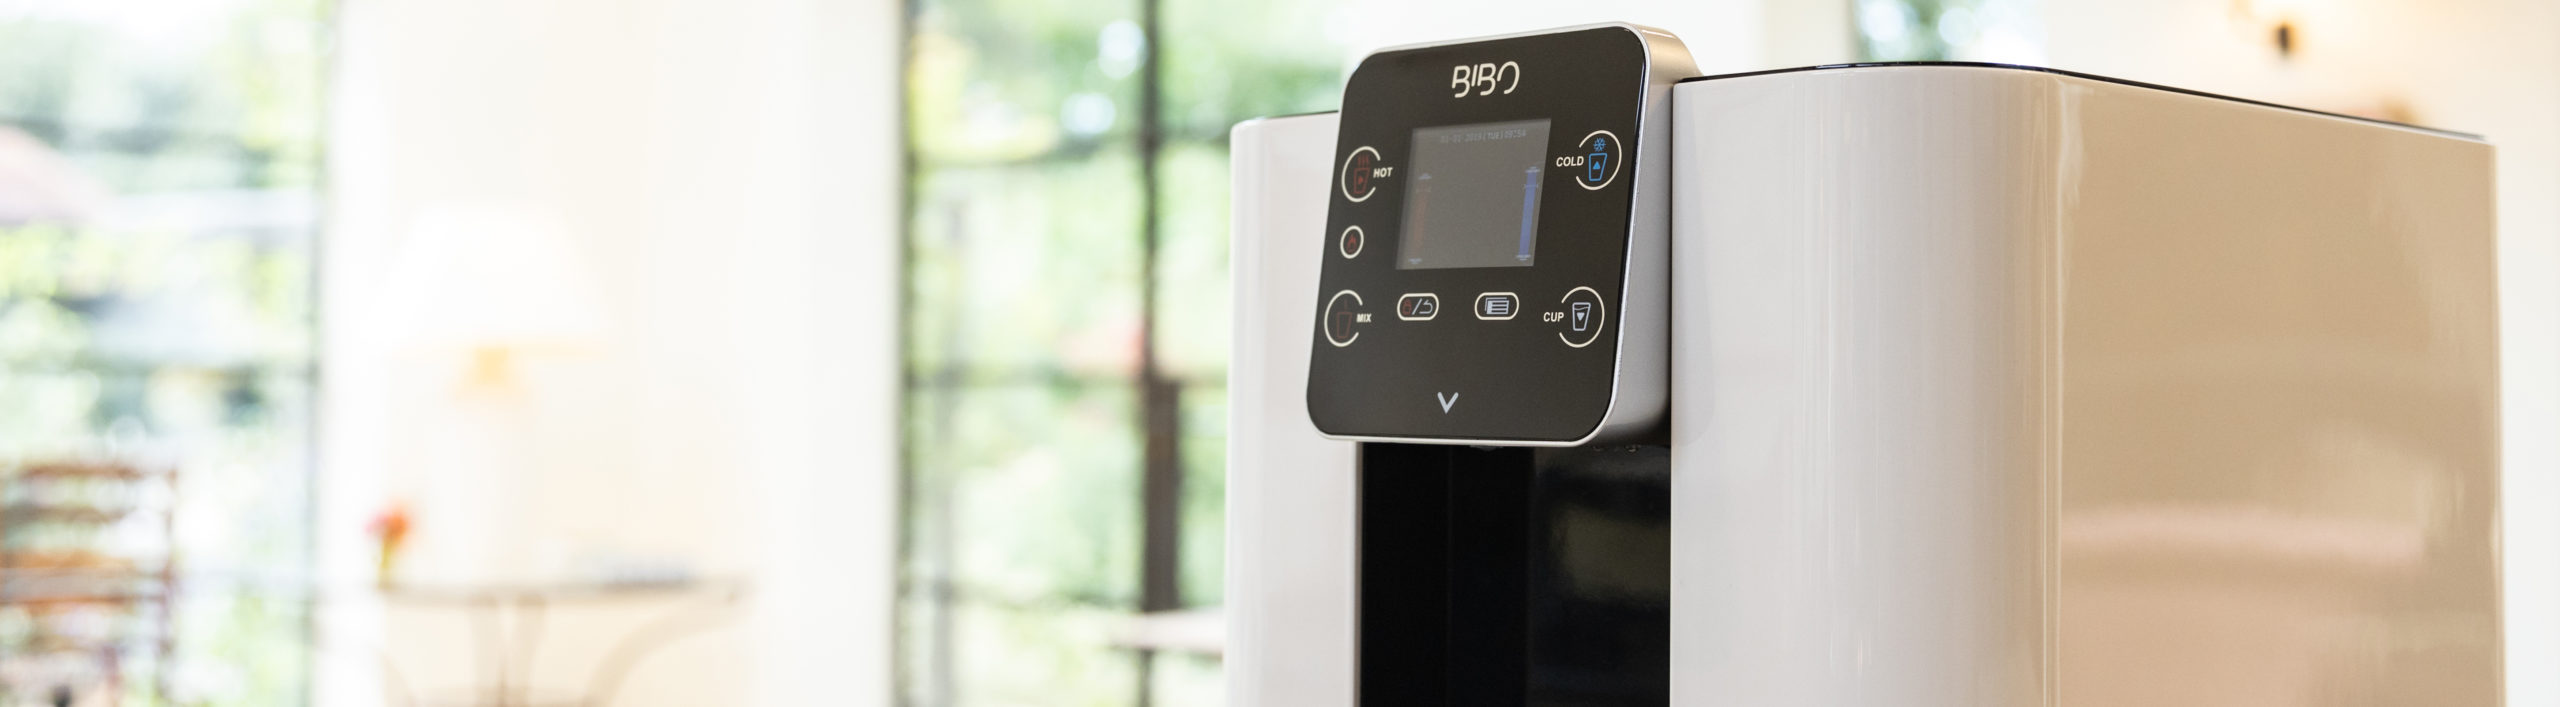 BIBO water dispenser for home use